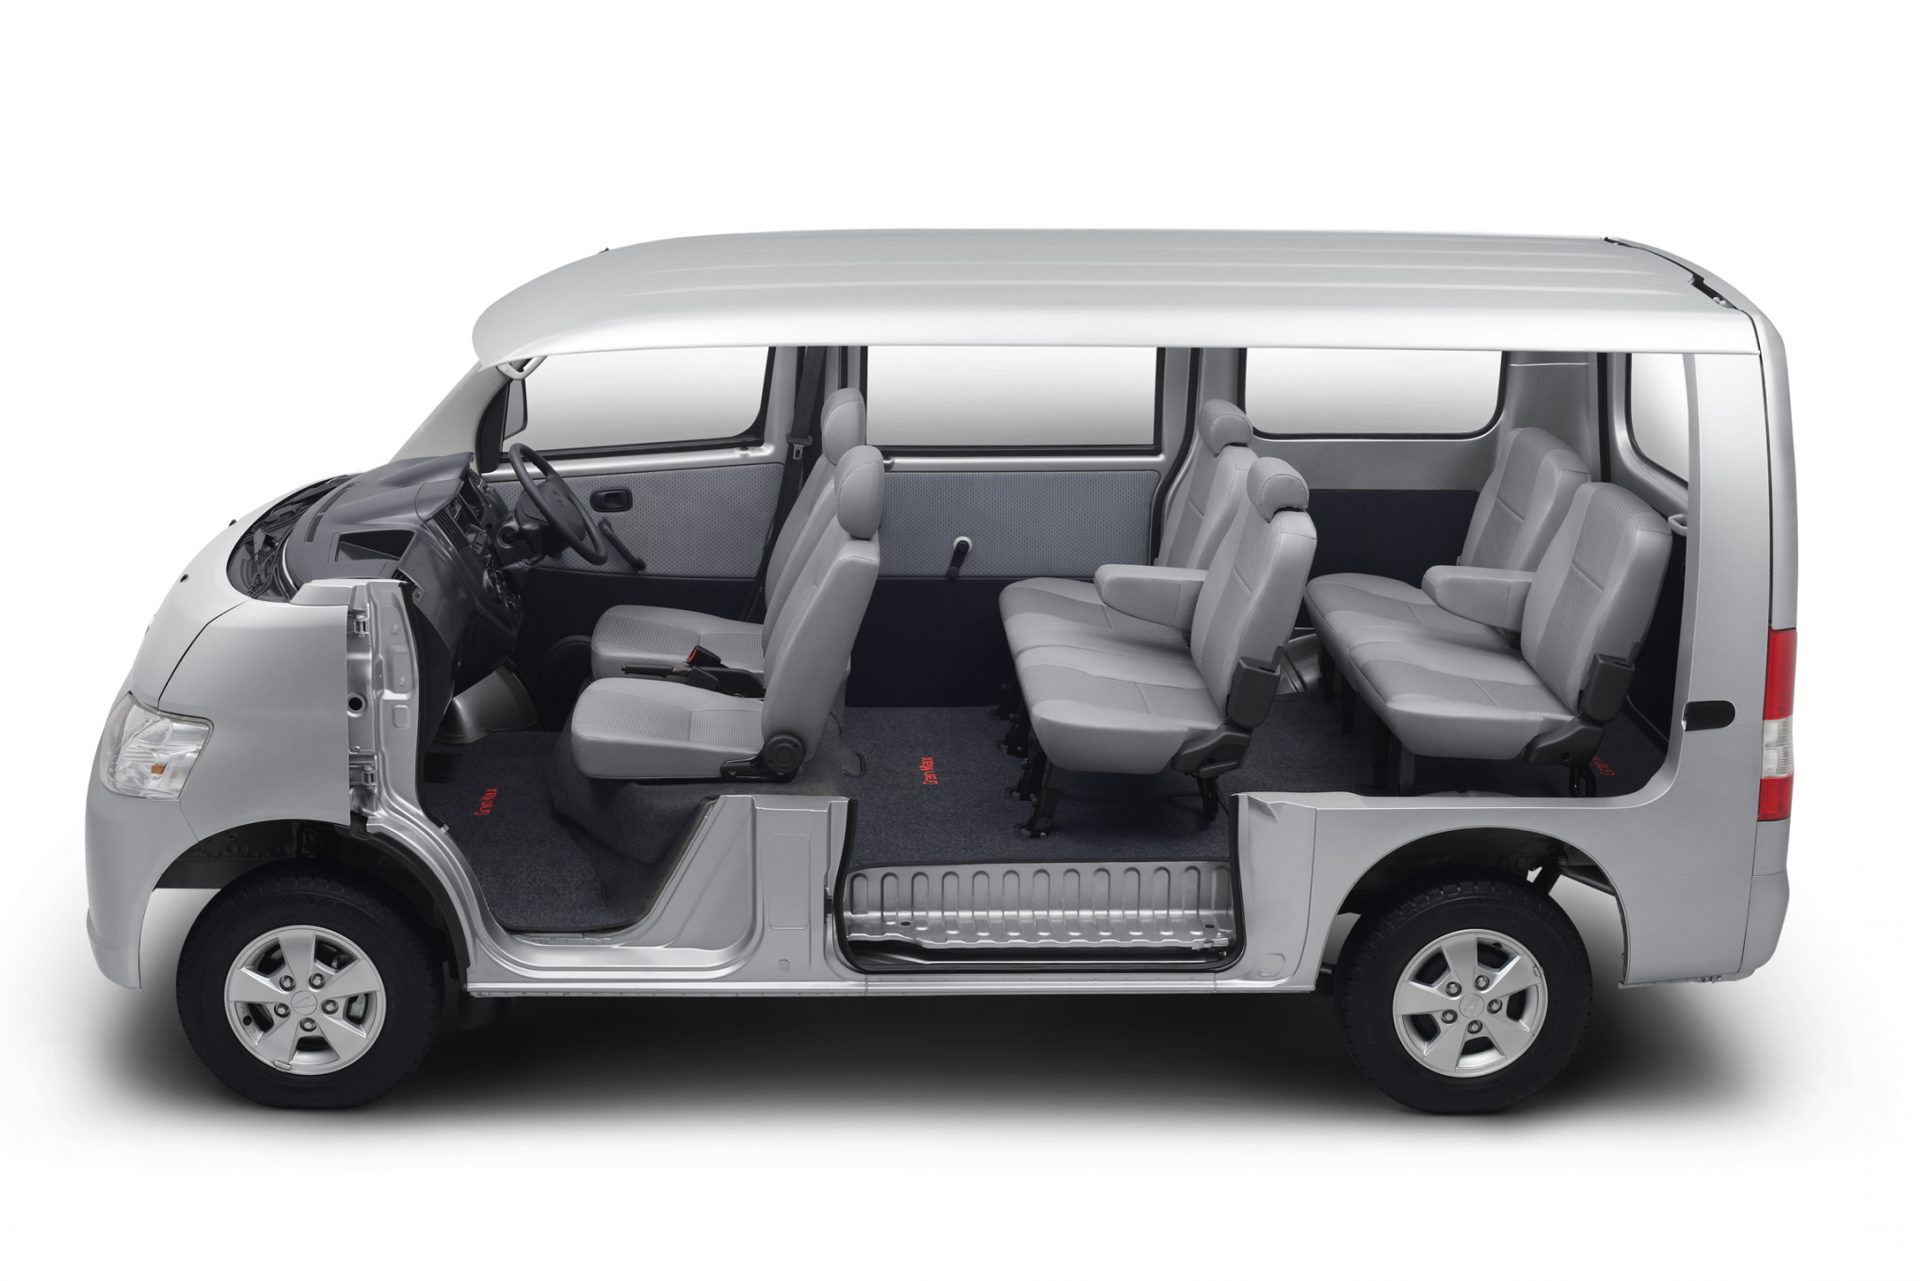 Daihatsu Gran Max 2020 Price In Pakistan Features